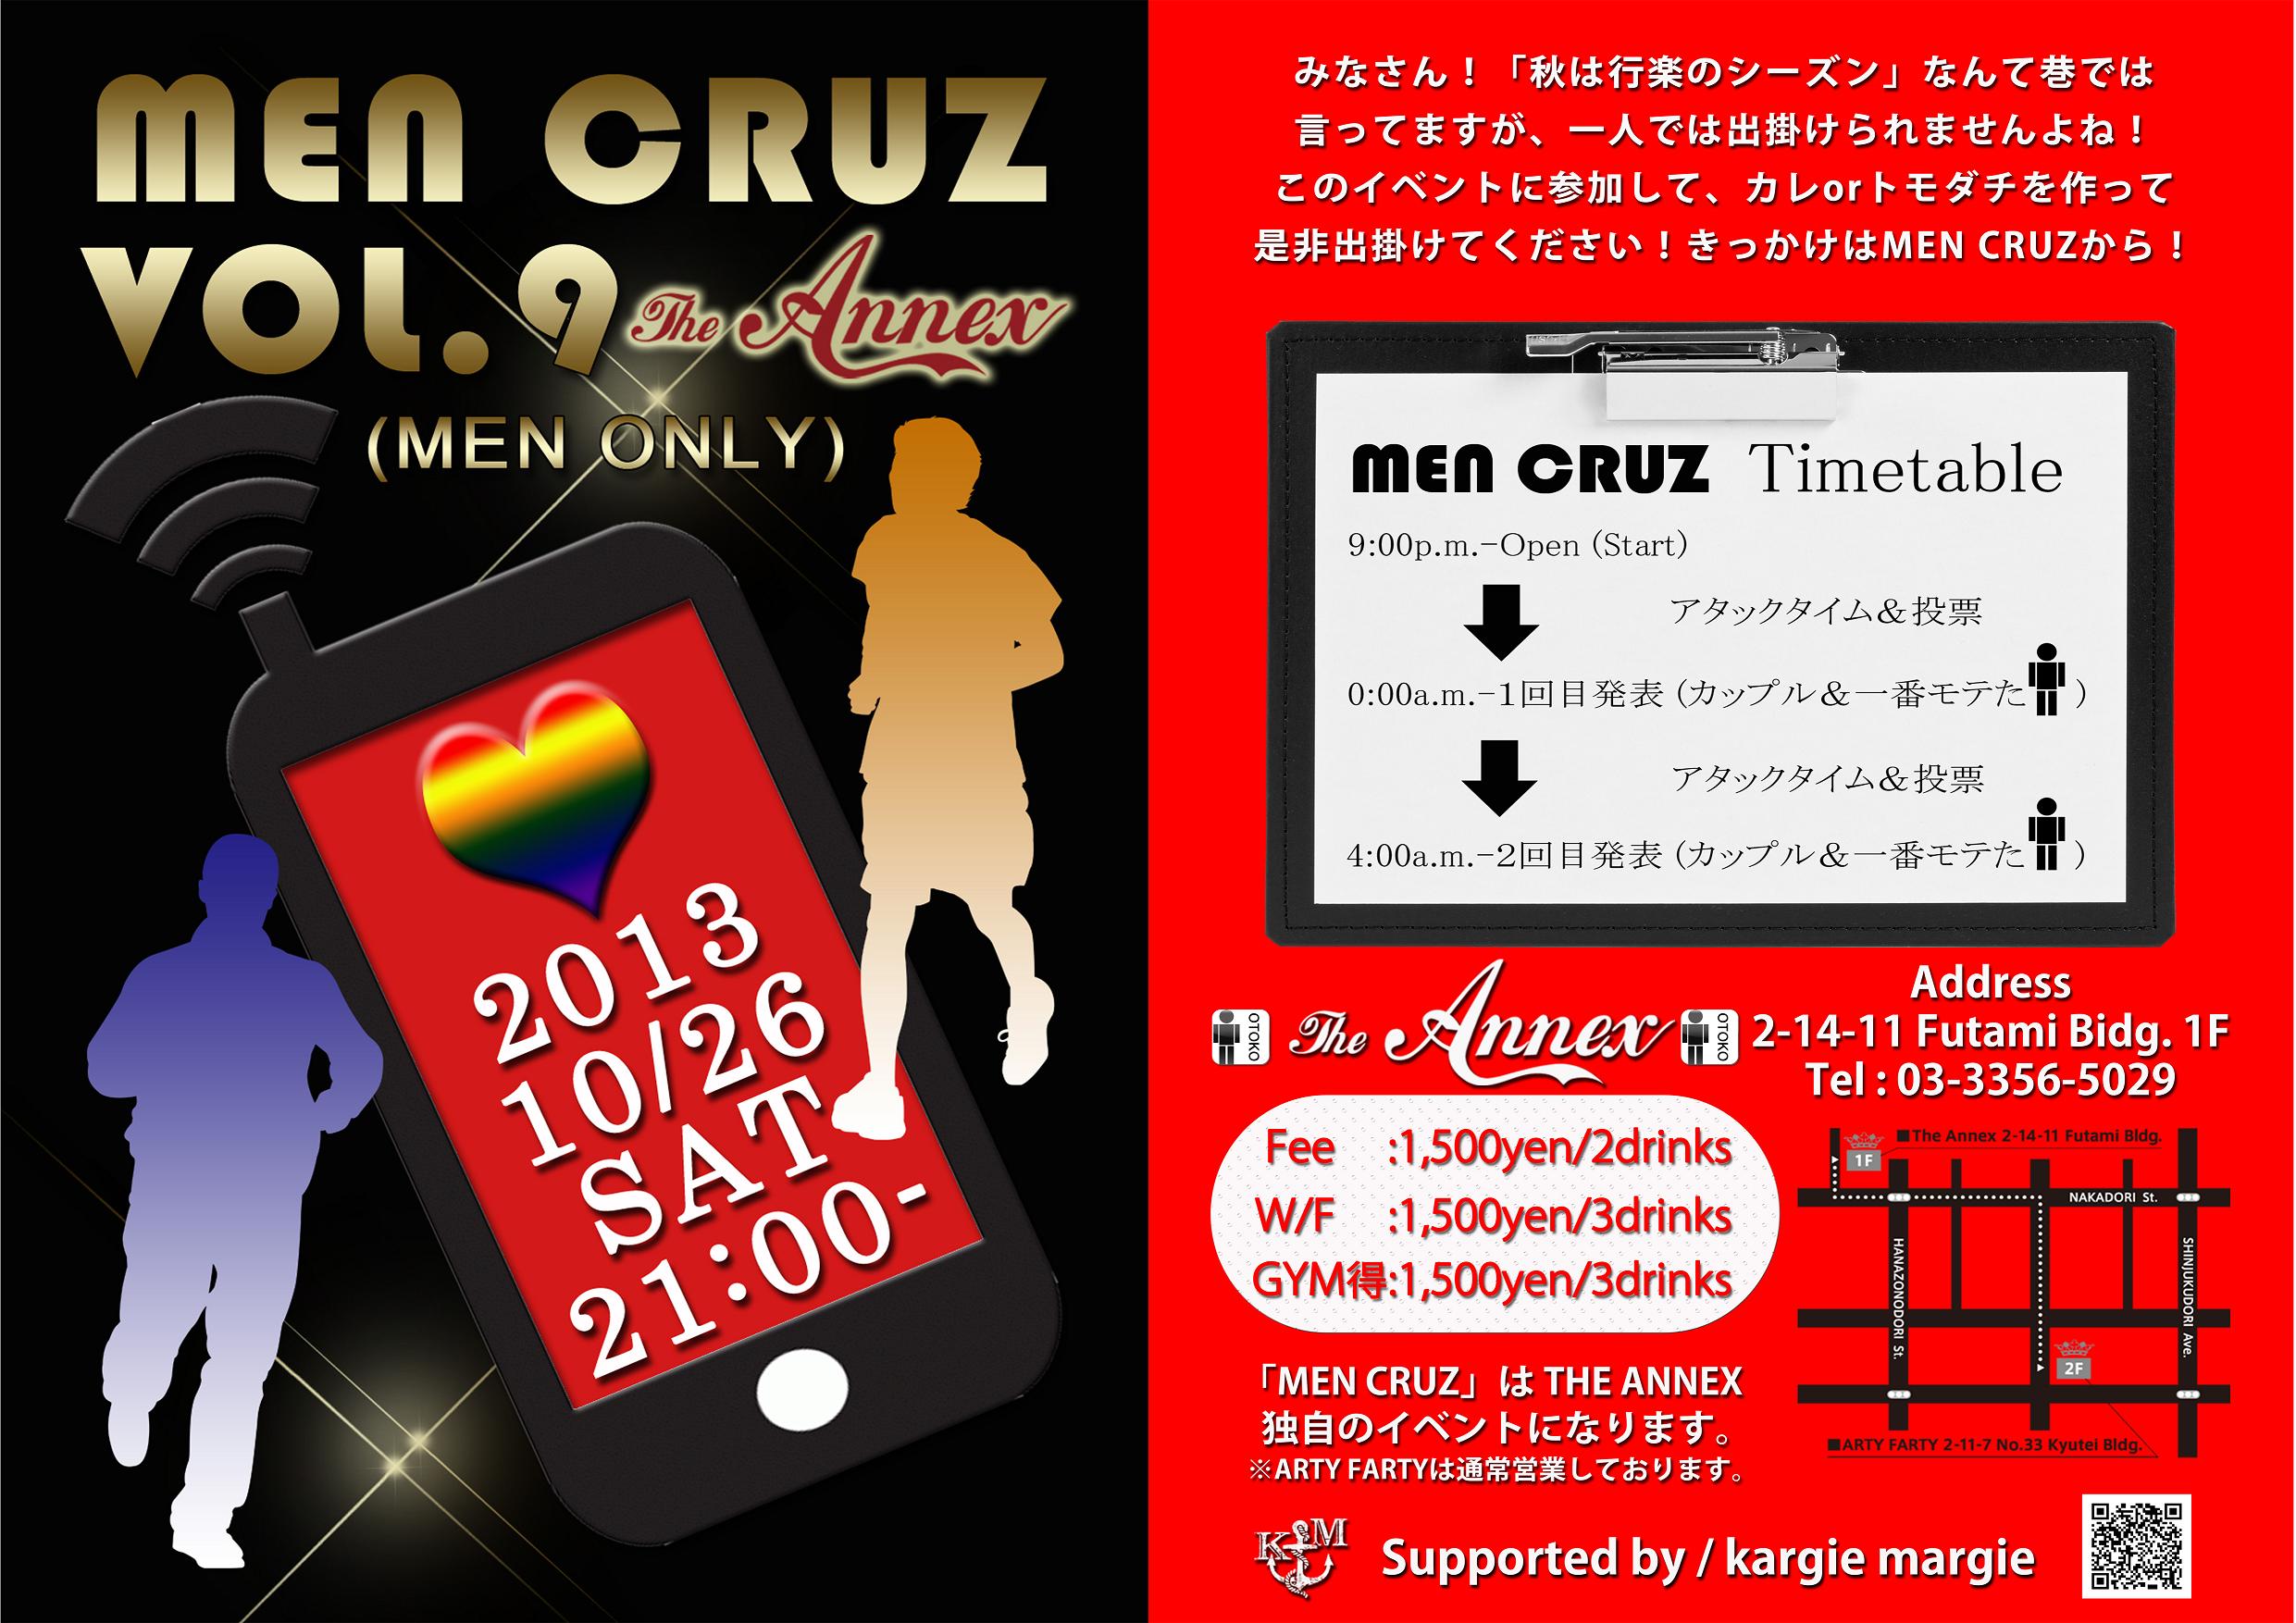 Men Cruz Vol.9 (Hunt Shot Game) (Men Only) 2481x1754 485.6kb